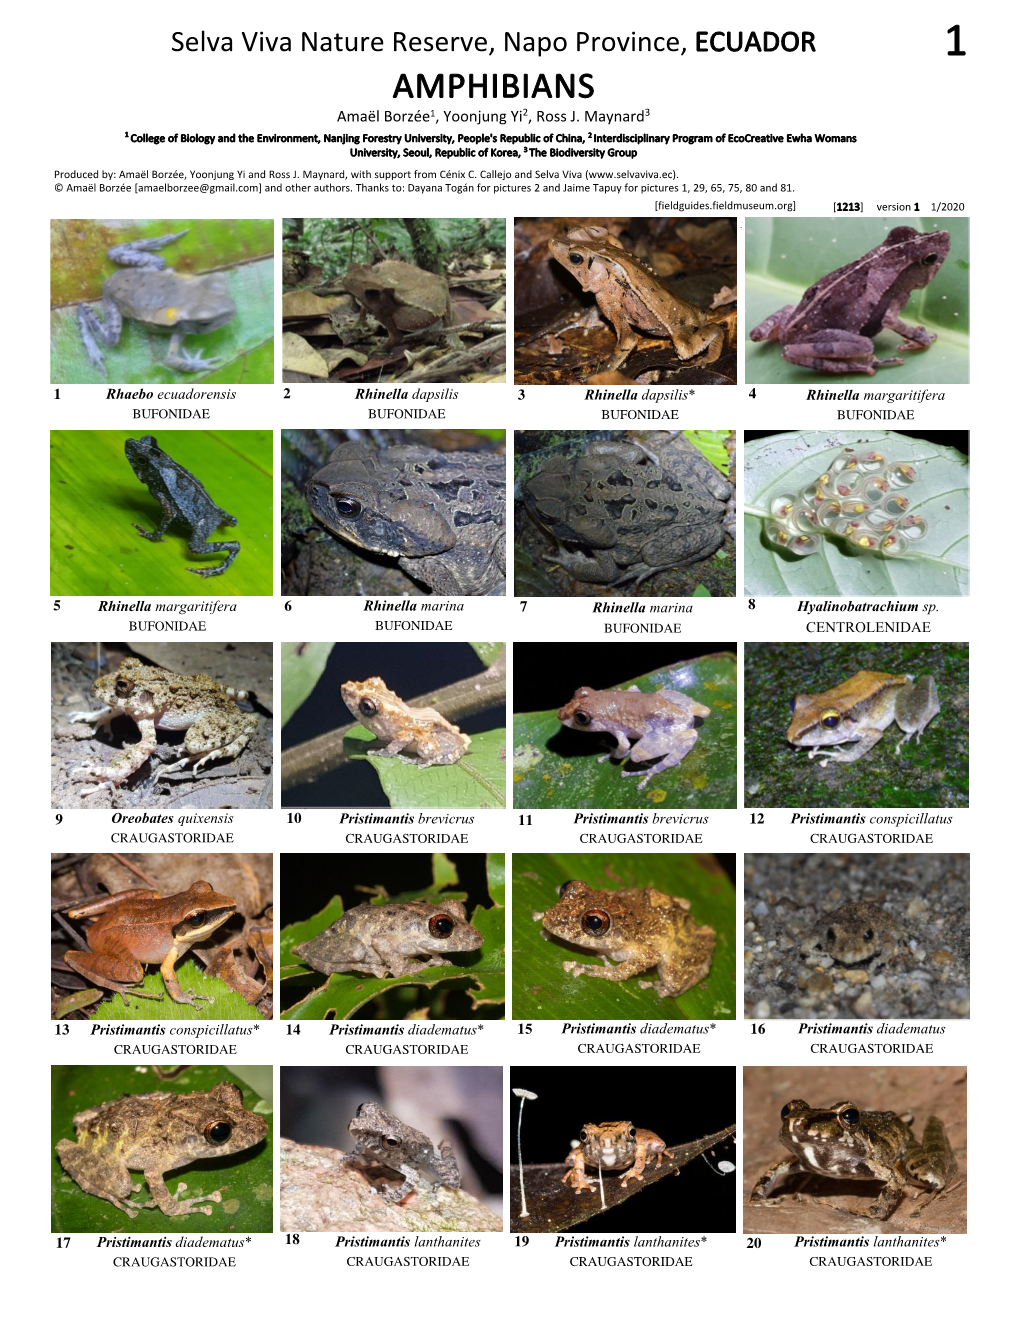 1213 Amphibians of Selva Viva Reserve